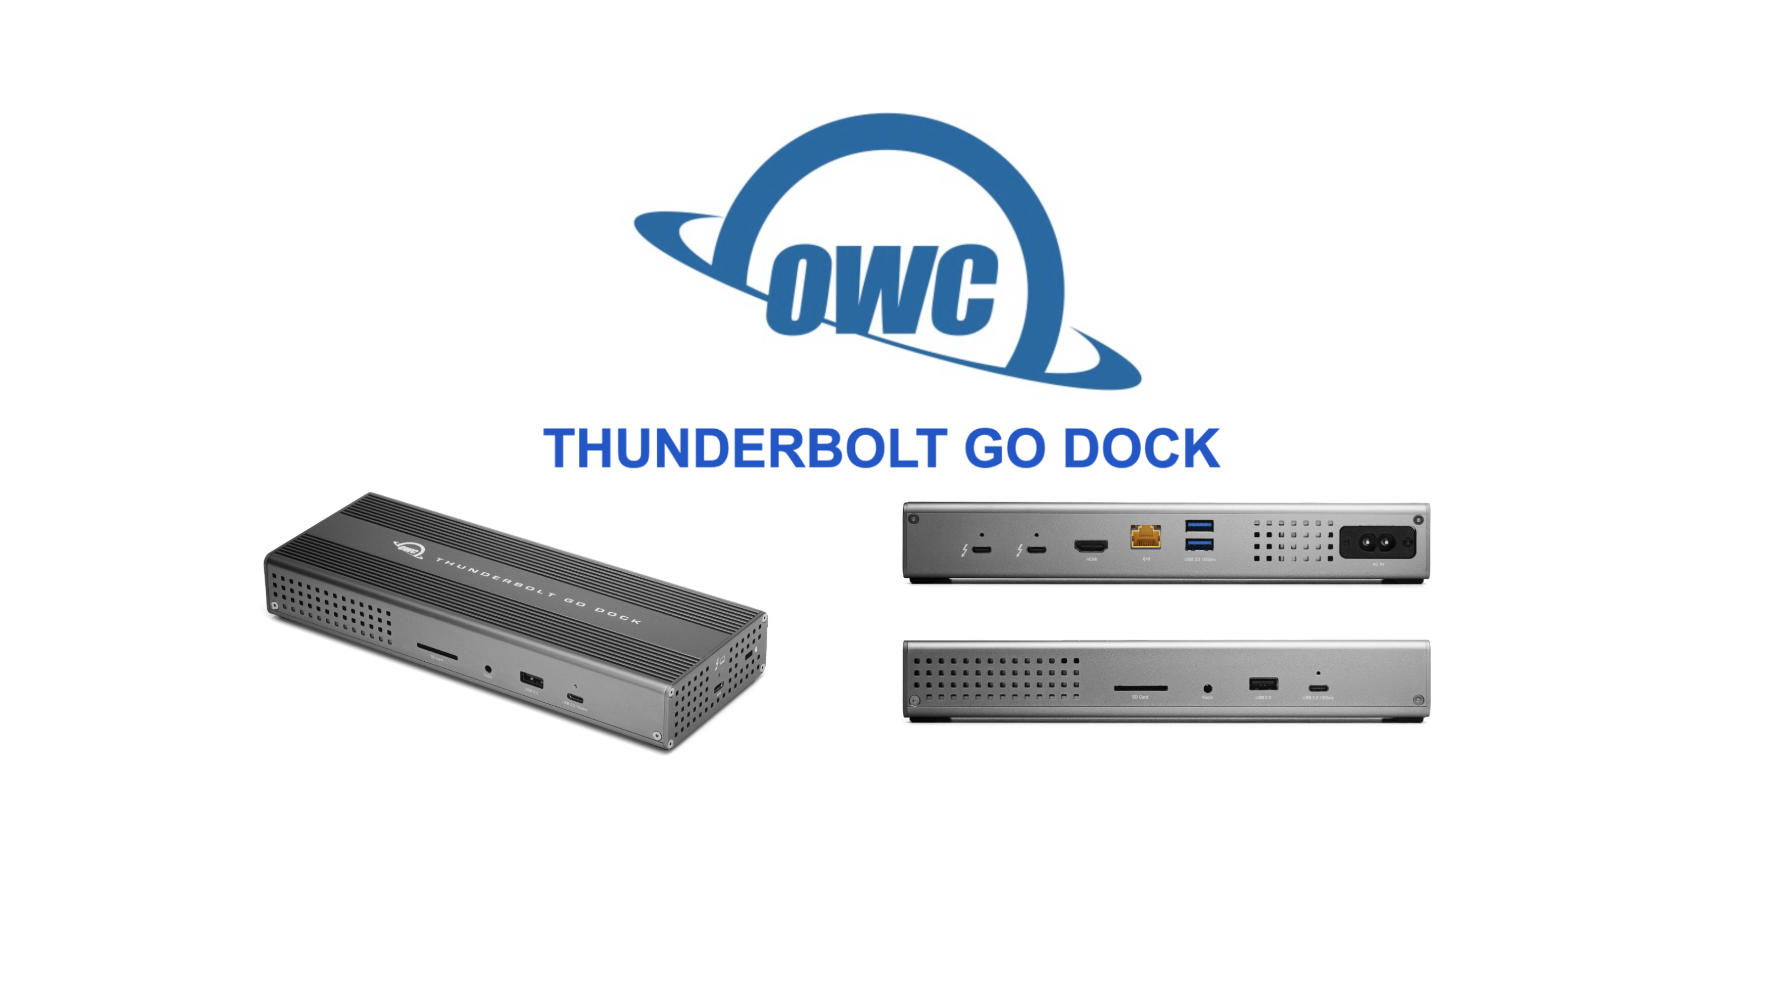 OWC Thunderbolt Pro Dock with 10GbE, USB Ports, at MacSales.com